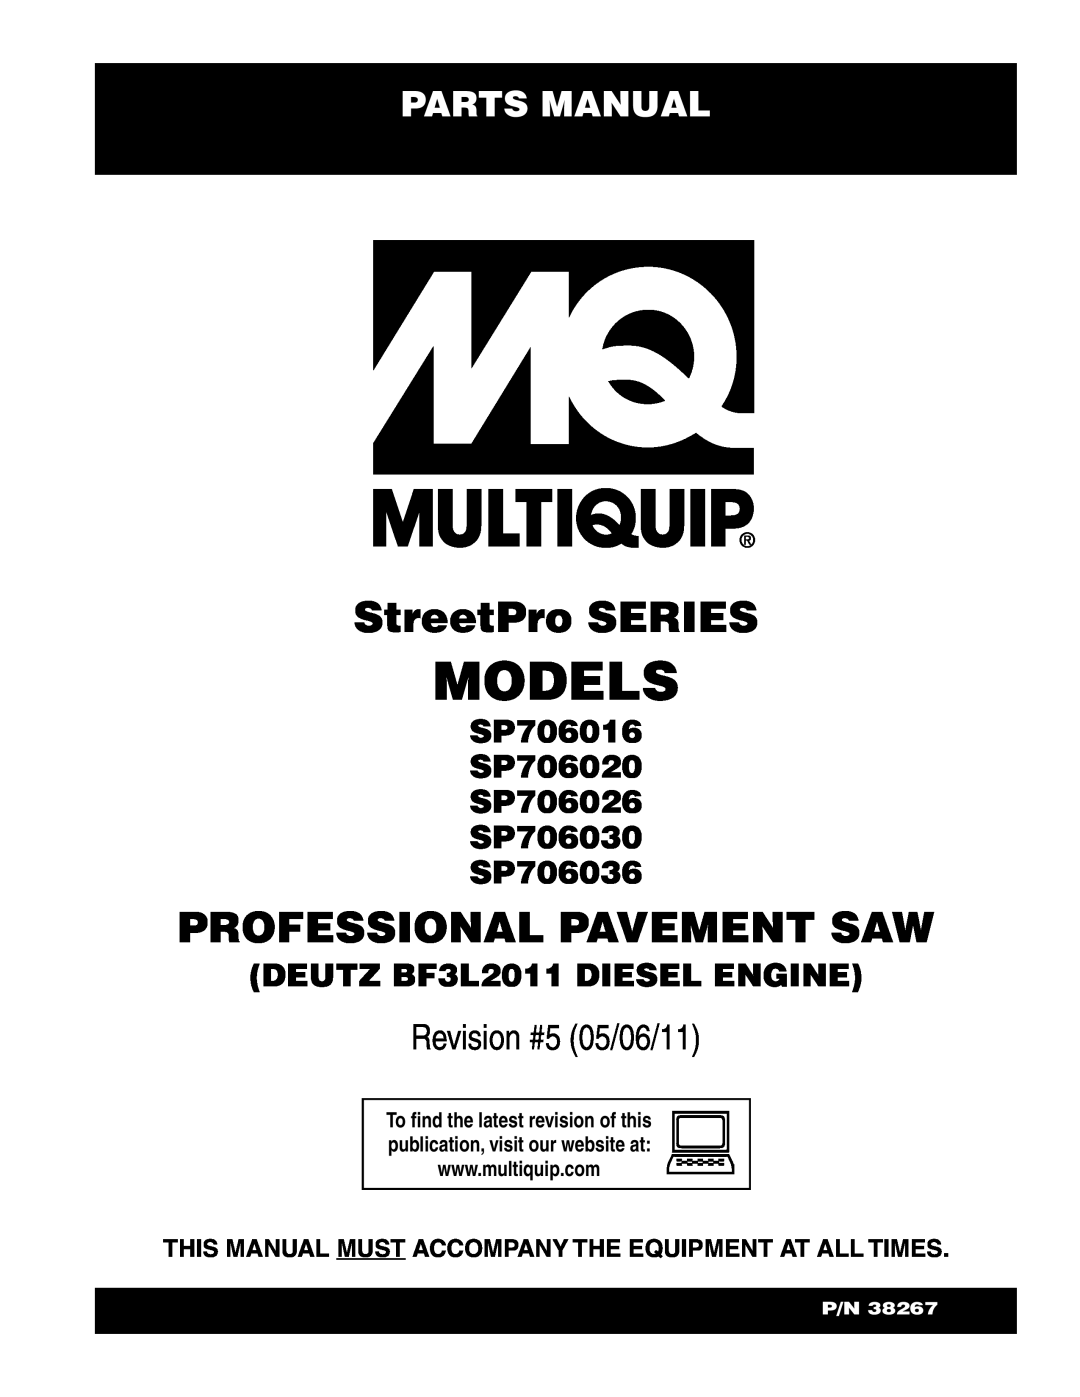 Multiquip SP706036 manual Parts Manual, Models, StreetPro SERIES, Professional Pavement Saw, Revision #5 05/06/11 